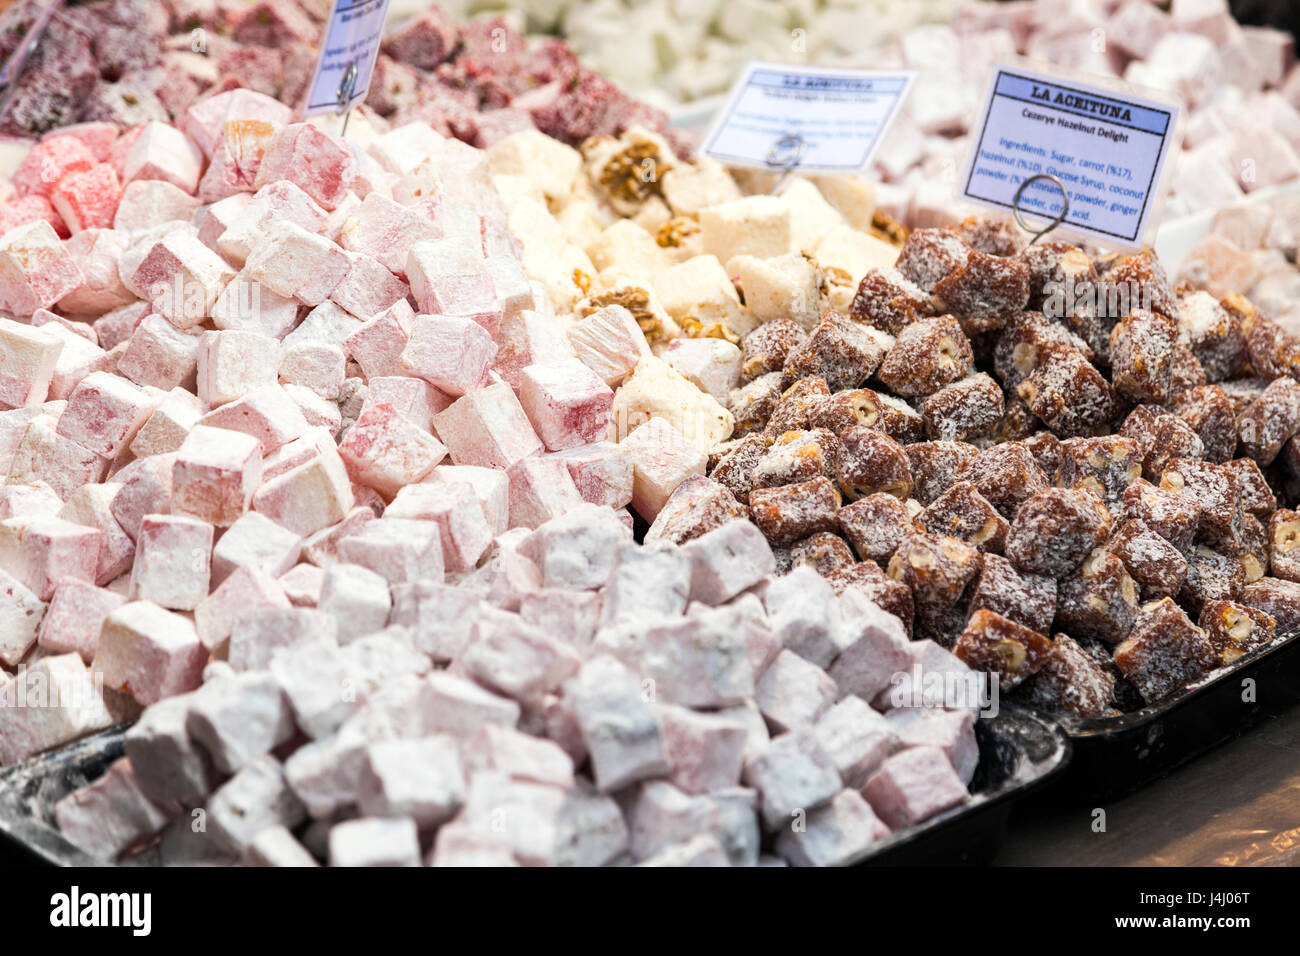 Turkish delight confectionery at Spitalfields Market, London, UK Stock Photo